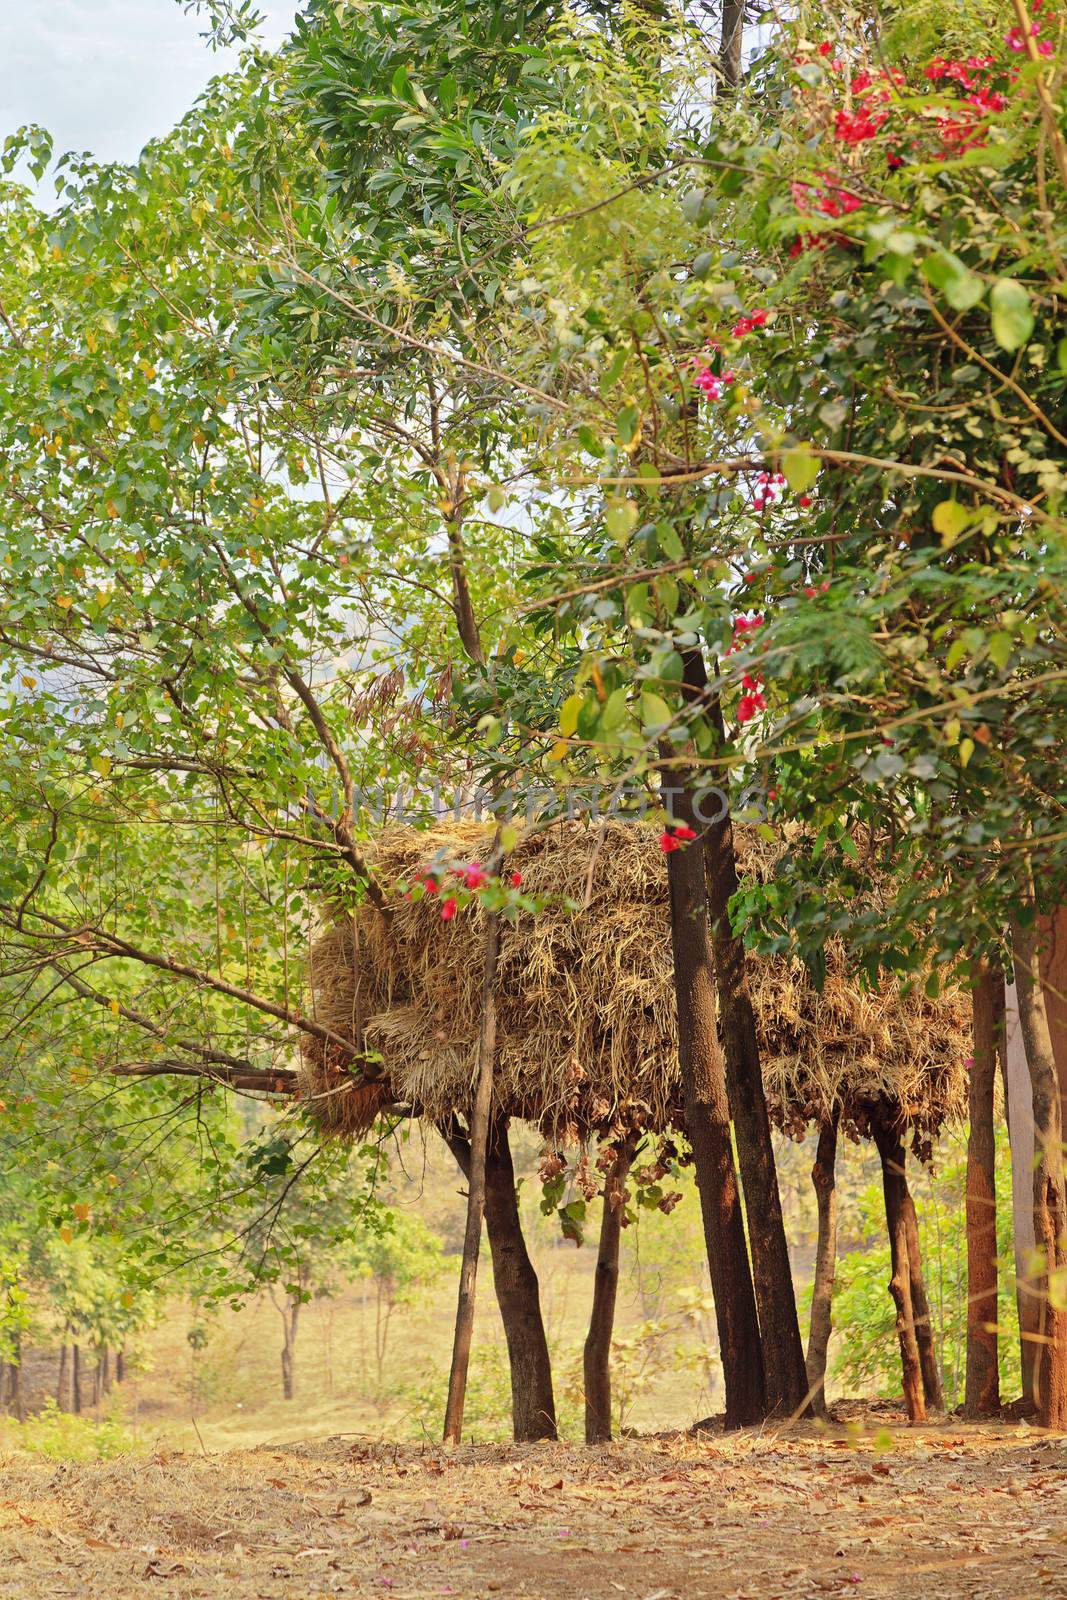 Indian cattle rearing haystack on stilts by arfabita